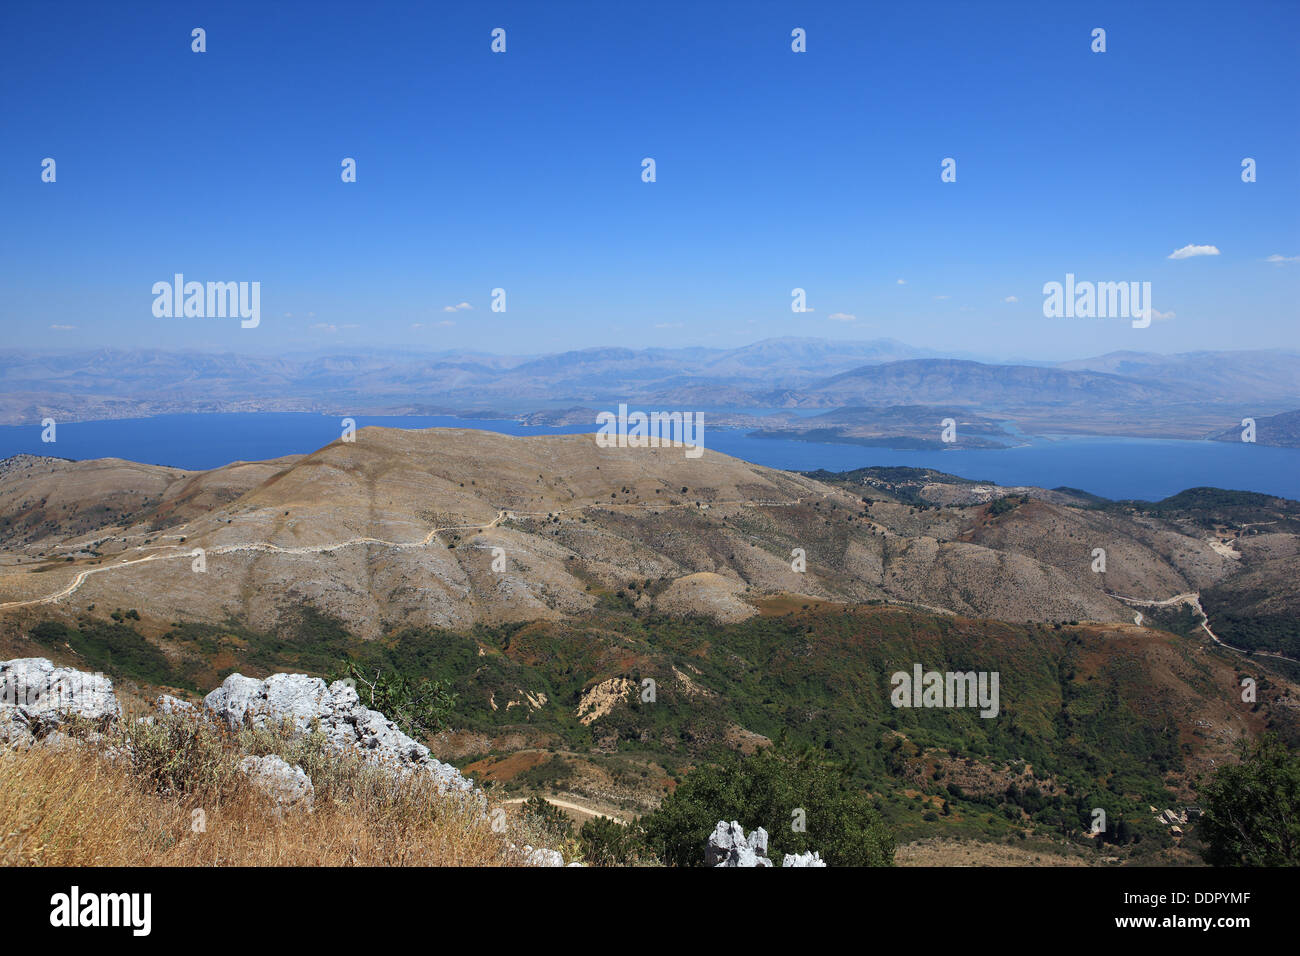 View towards Albania from the summit of Mount Pantokrator in Corfu Greece Stock Photo